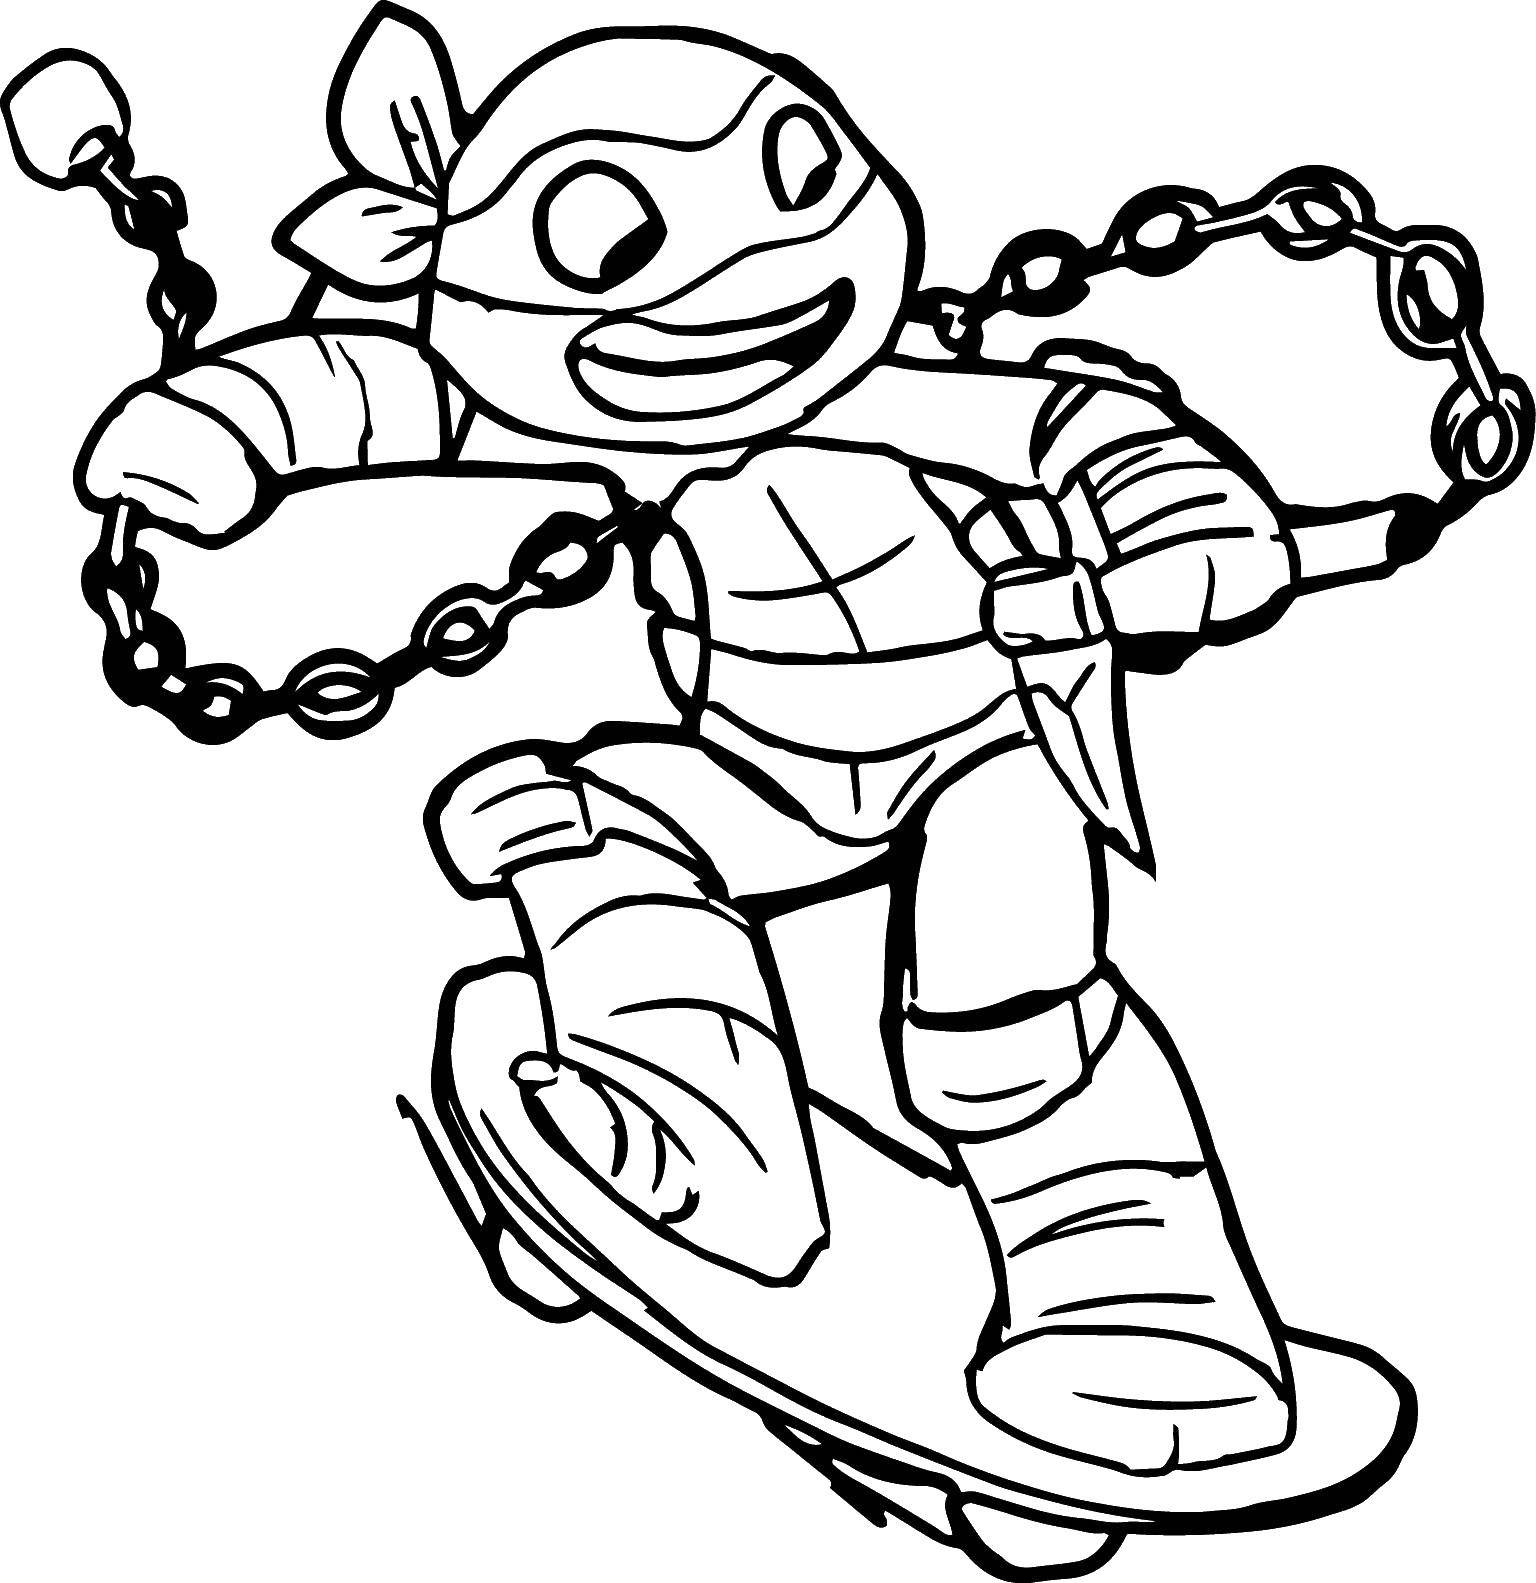 Coloring Michelangelo on a skateboard. Category ninja . Tags:  Comics, Teenage Mutant Ninja Turtles.